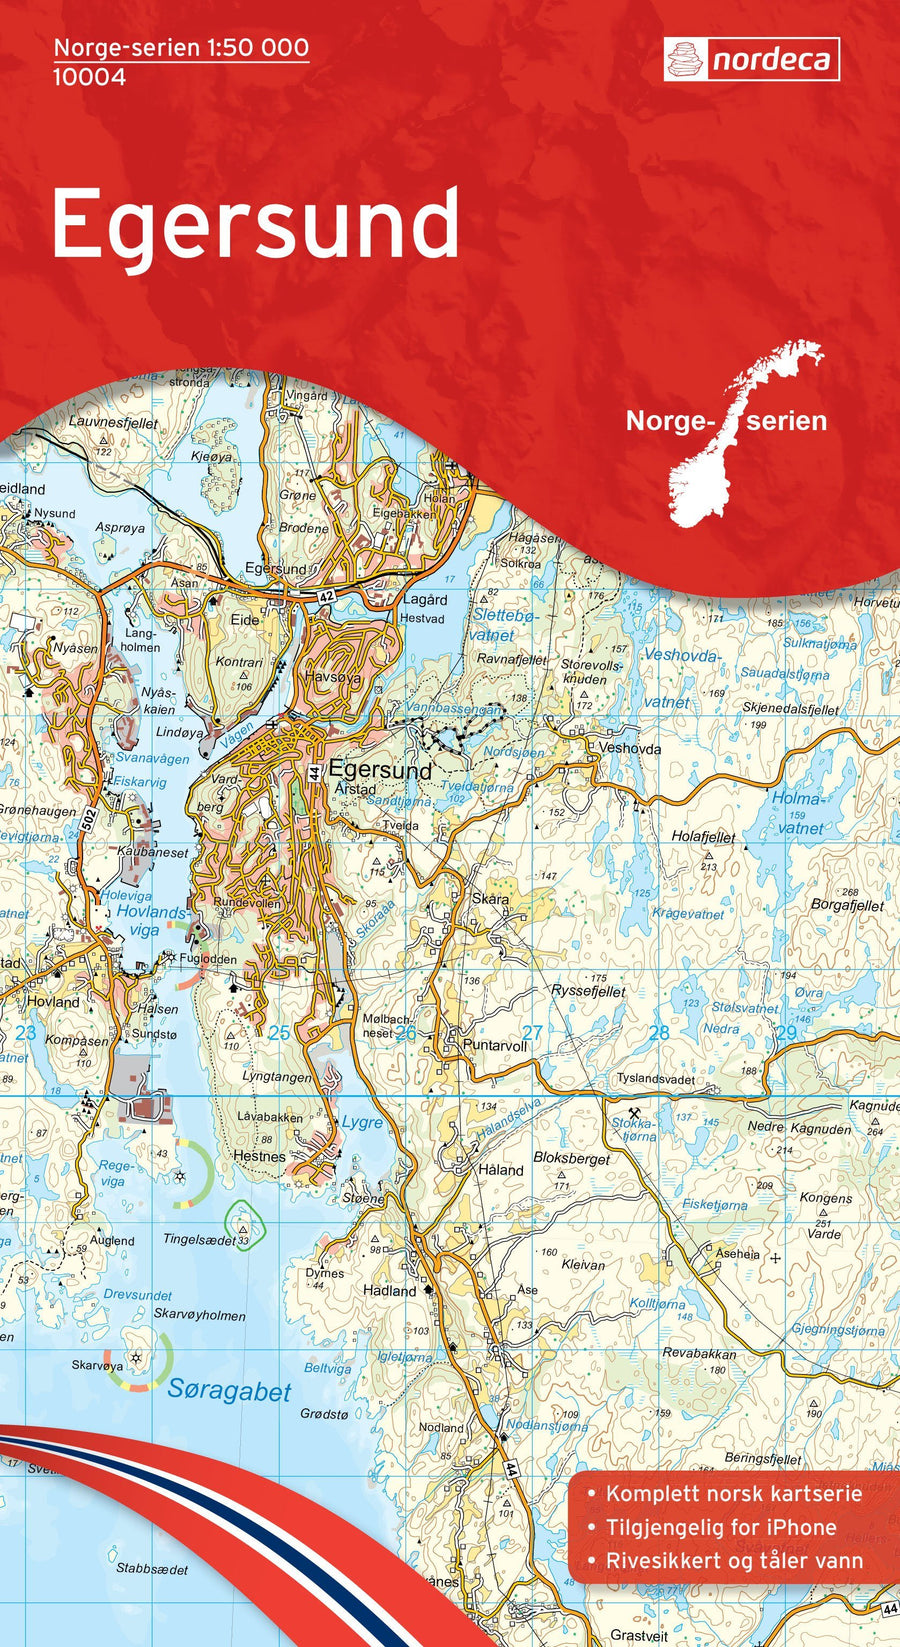 Carte de randonnée n° 10004 - Egersund (Norvège) | Nordeca - Norge-serien carte pliée Nordeca 